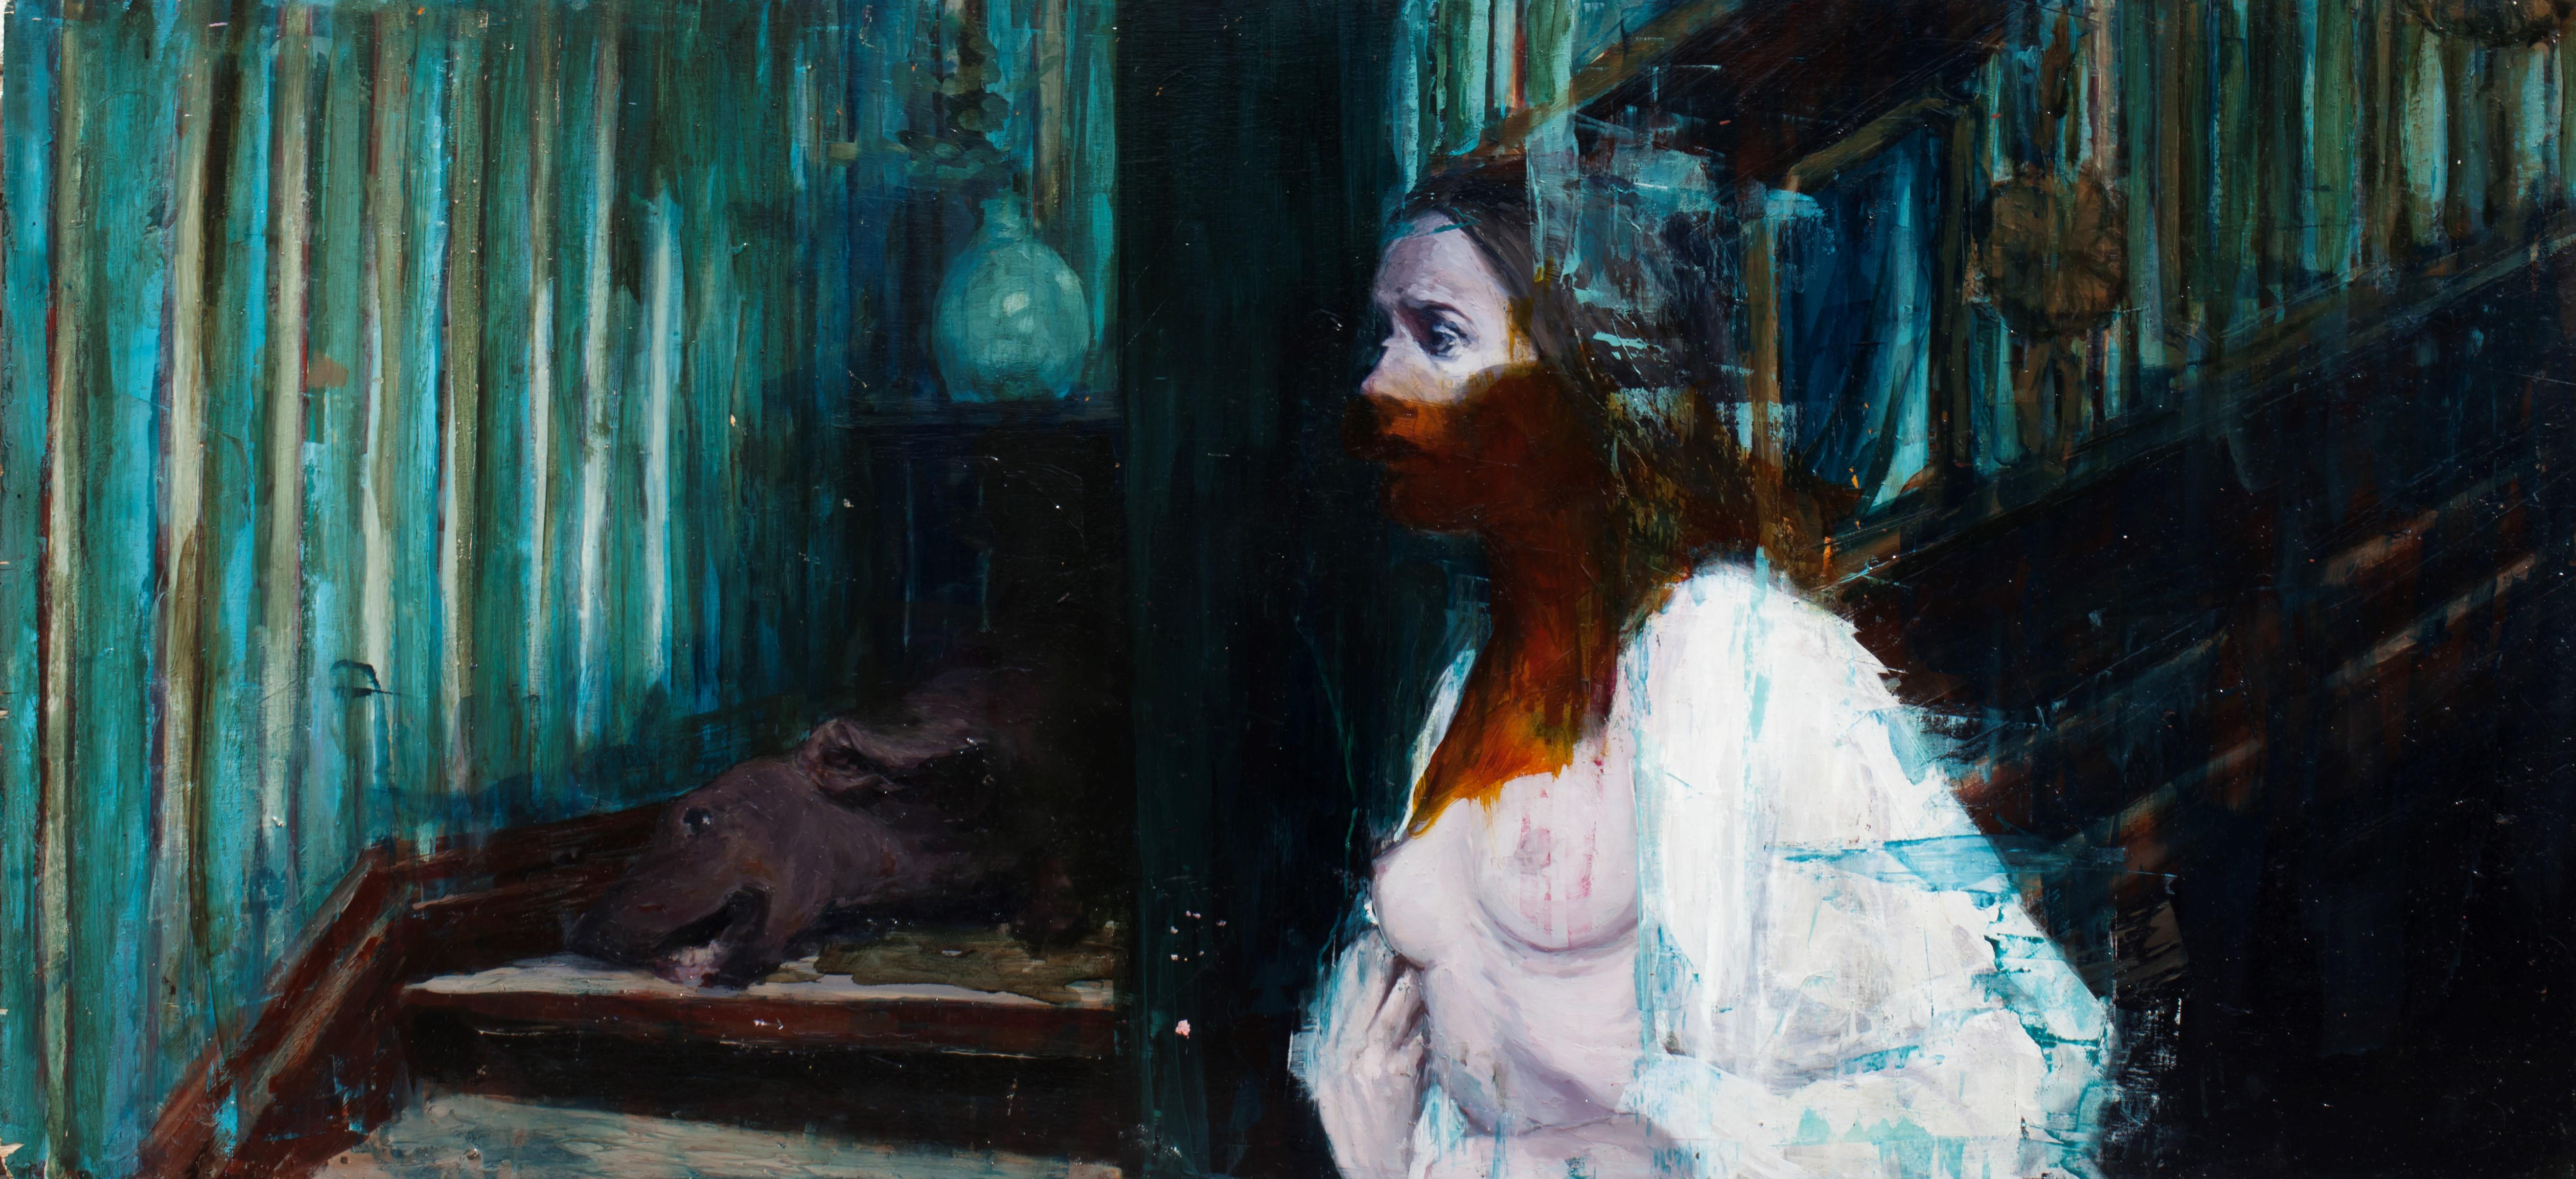 Georgia Hinaris Figurative Painting – I Spit on Your Angst - Original Ölgemälde auf Tafel mit nackter Frau